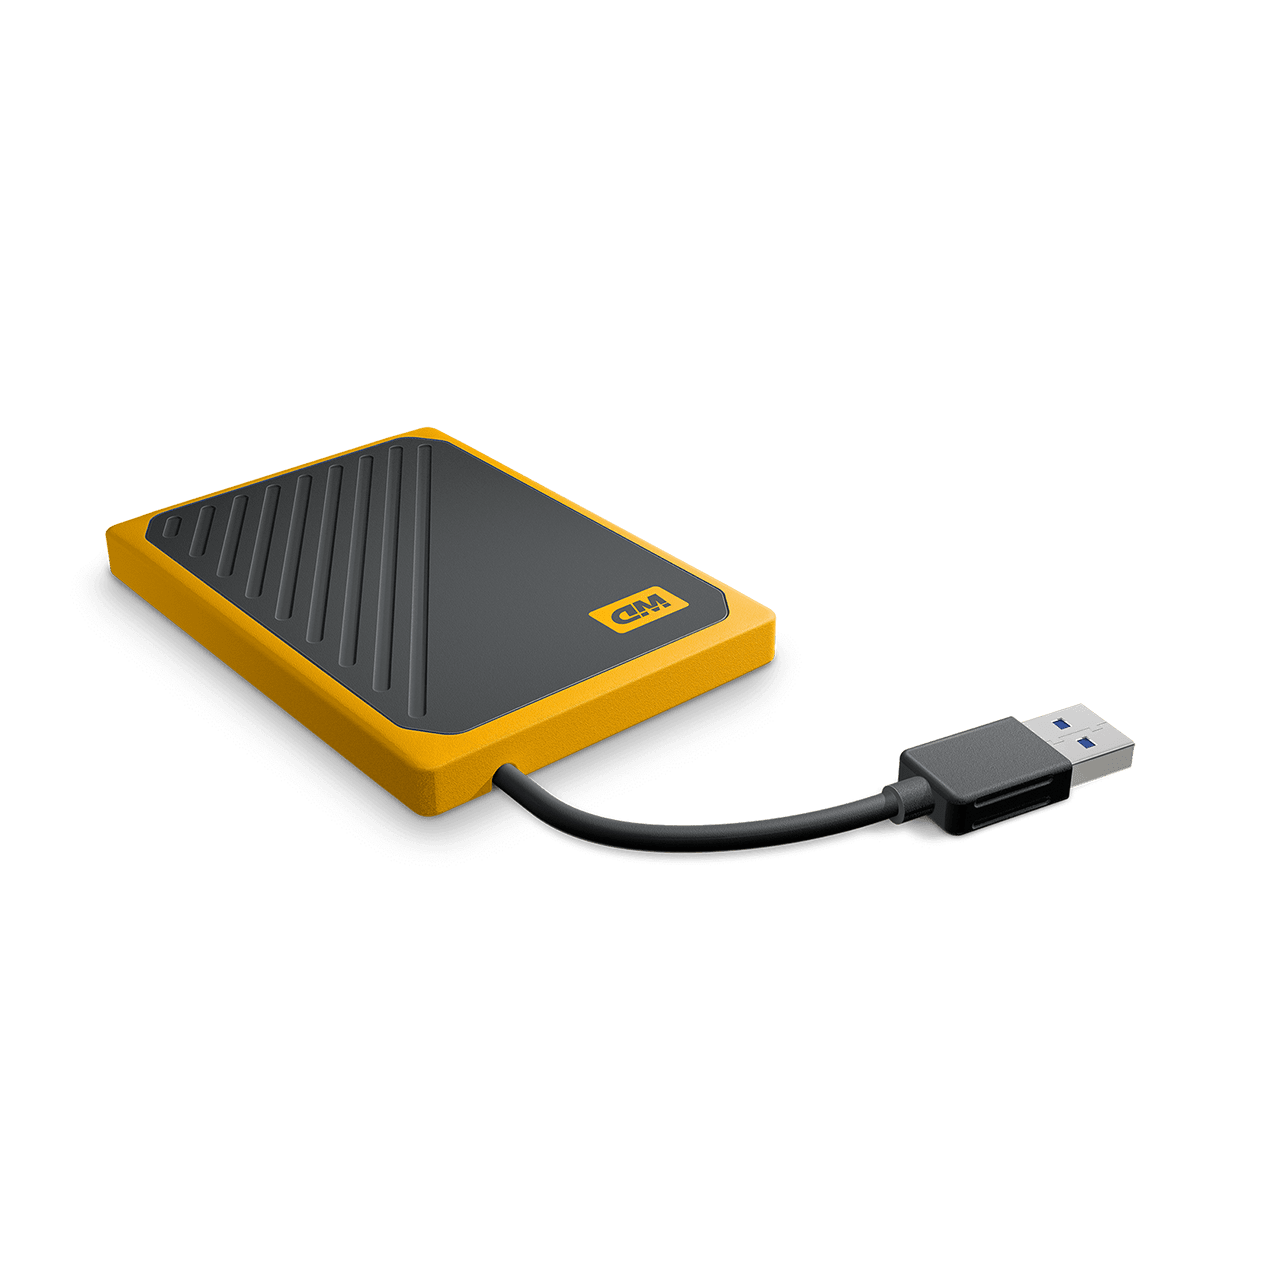 WD Passport GO SSD 1TB 2.5" External SSD - Yellow (WDBMCG0010BYT)